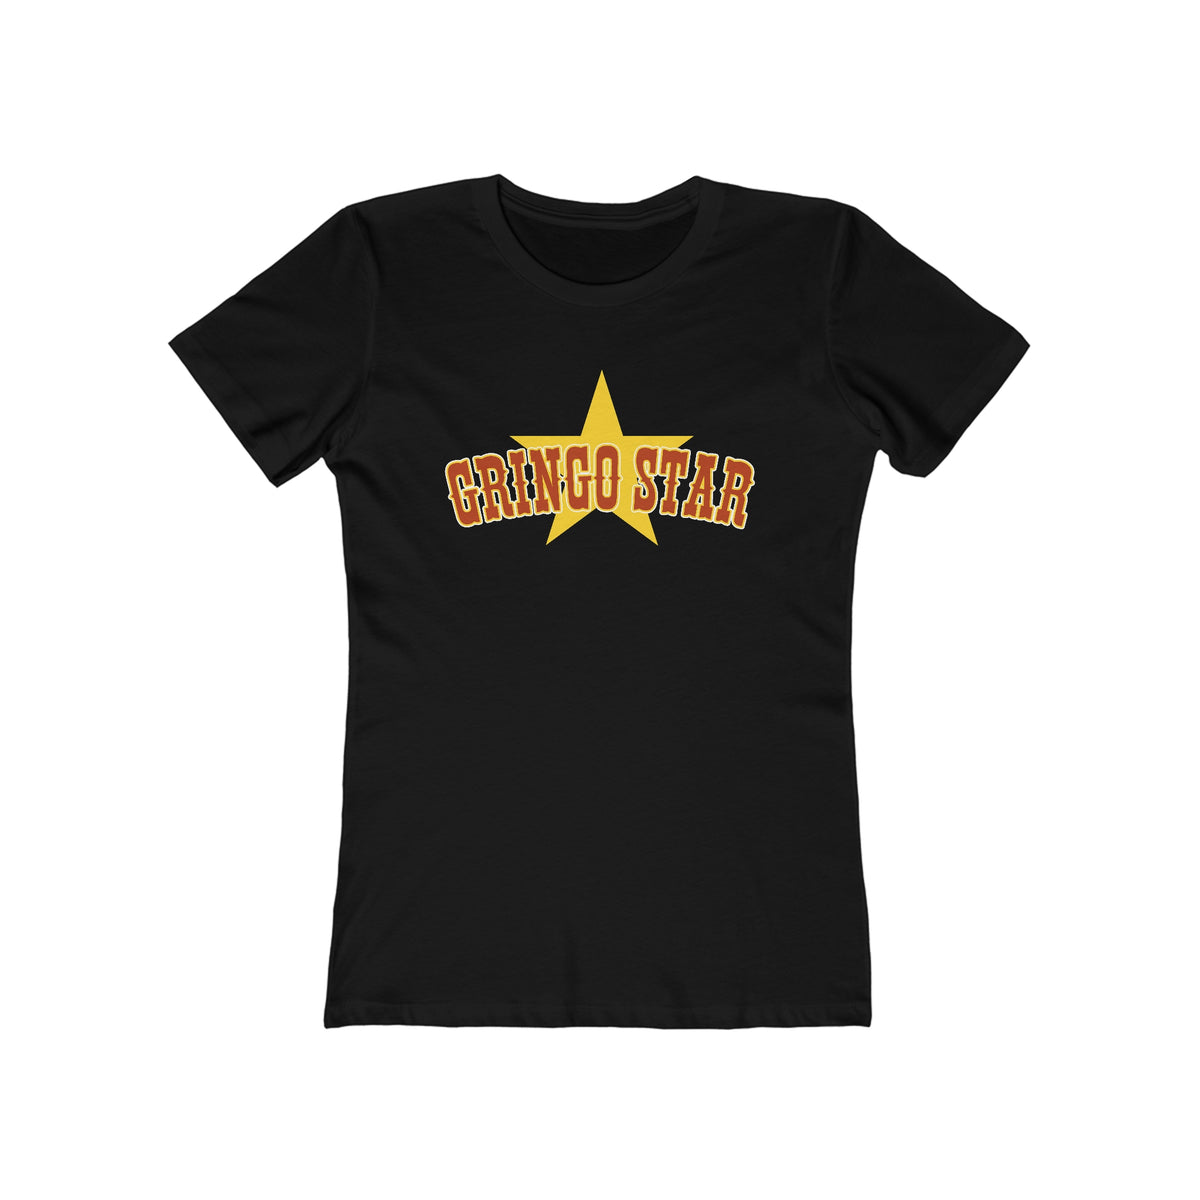 Gringo Star - Women’s T-Shirt